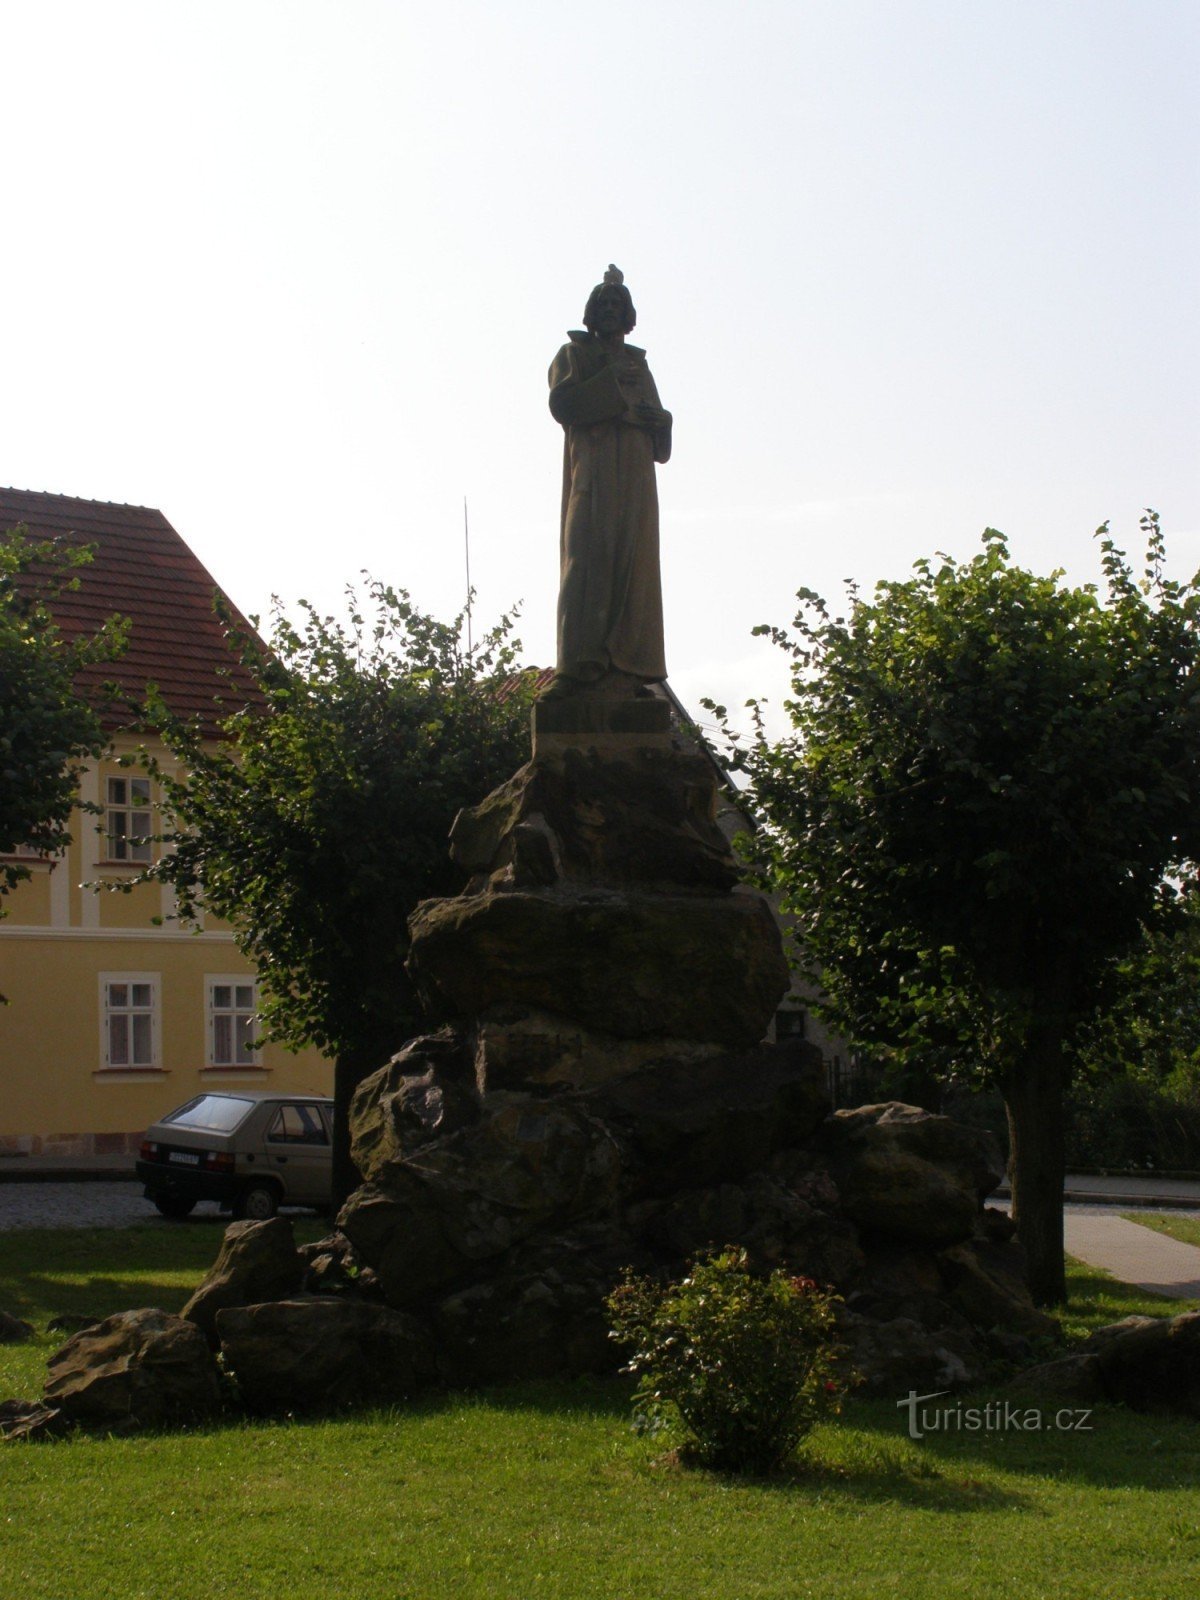 Ferrovia - monumento ao Mestre Jan Hus